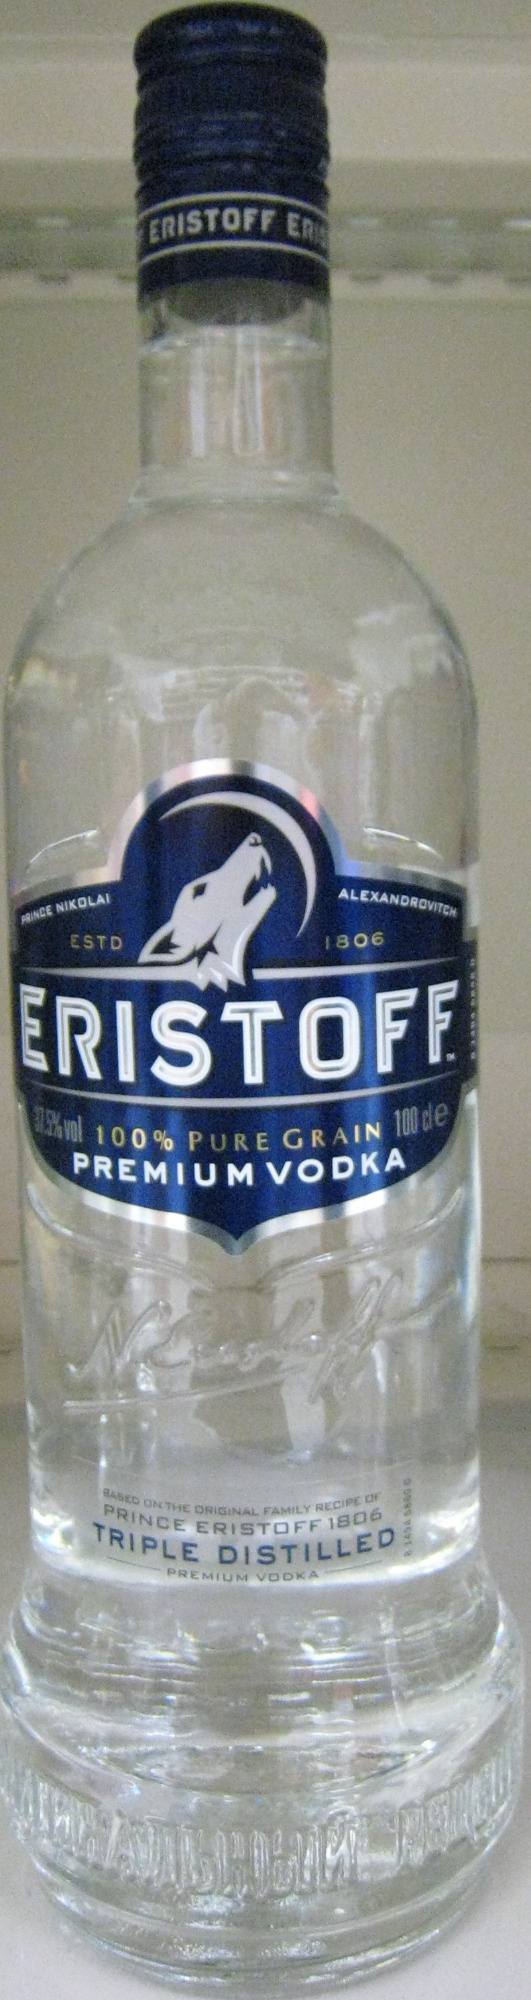 Vodka 100 cl Eristoff - Produit